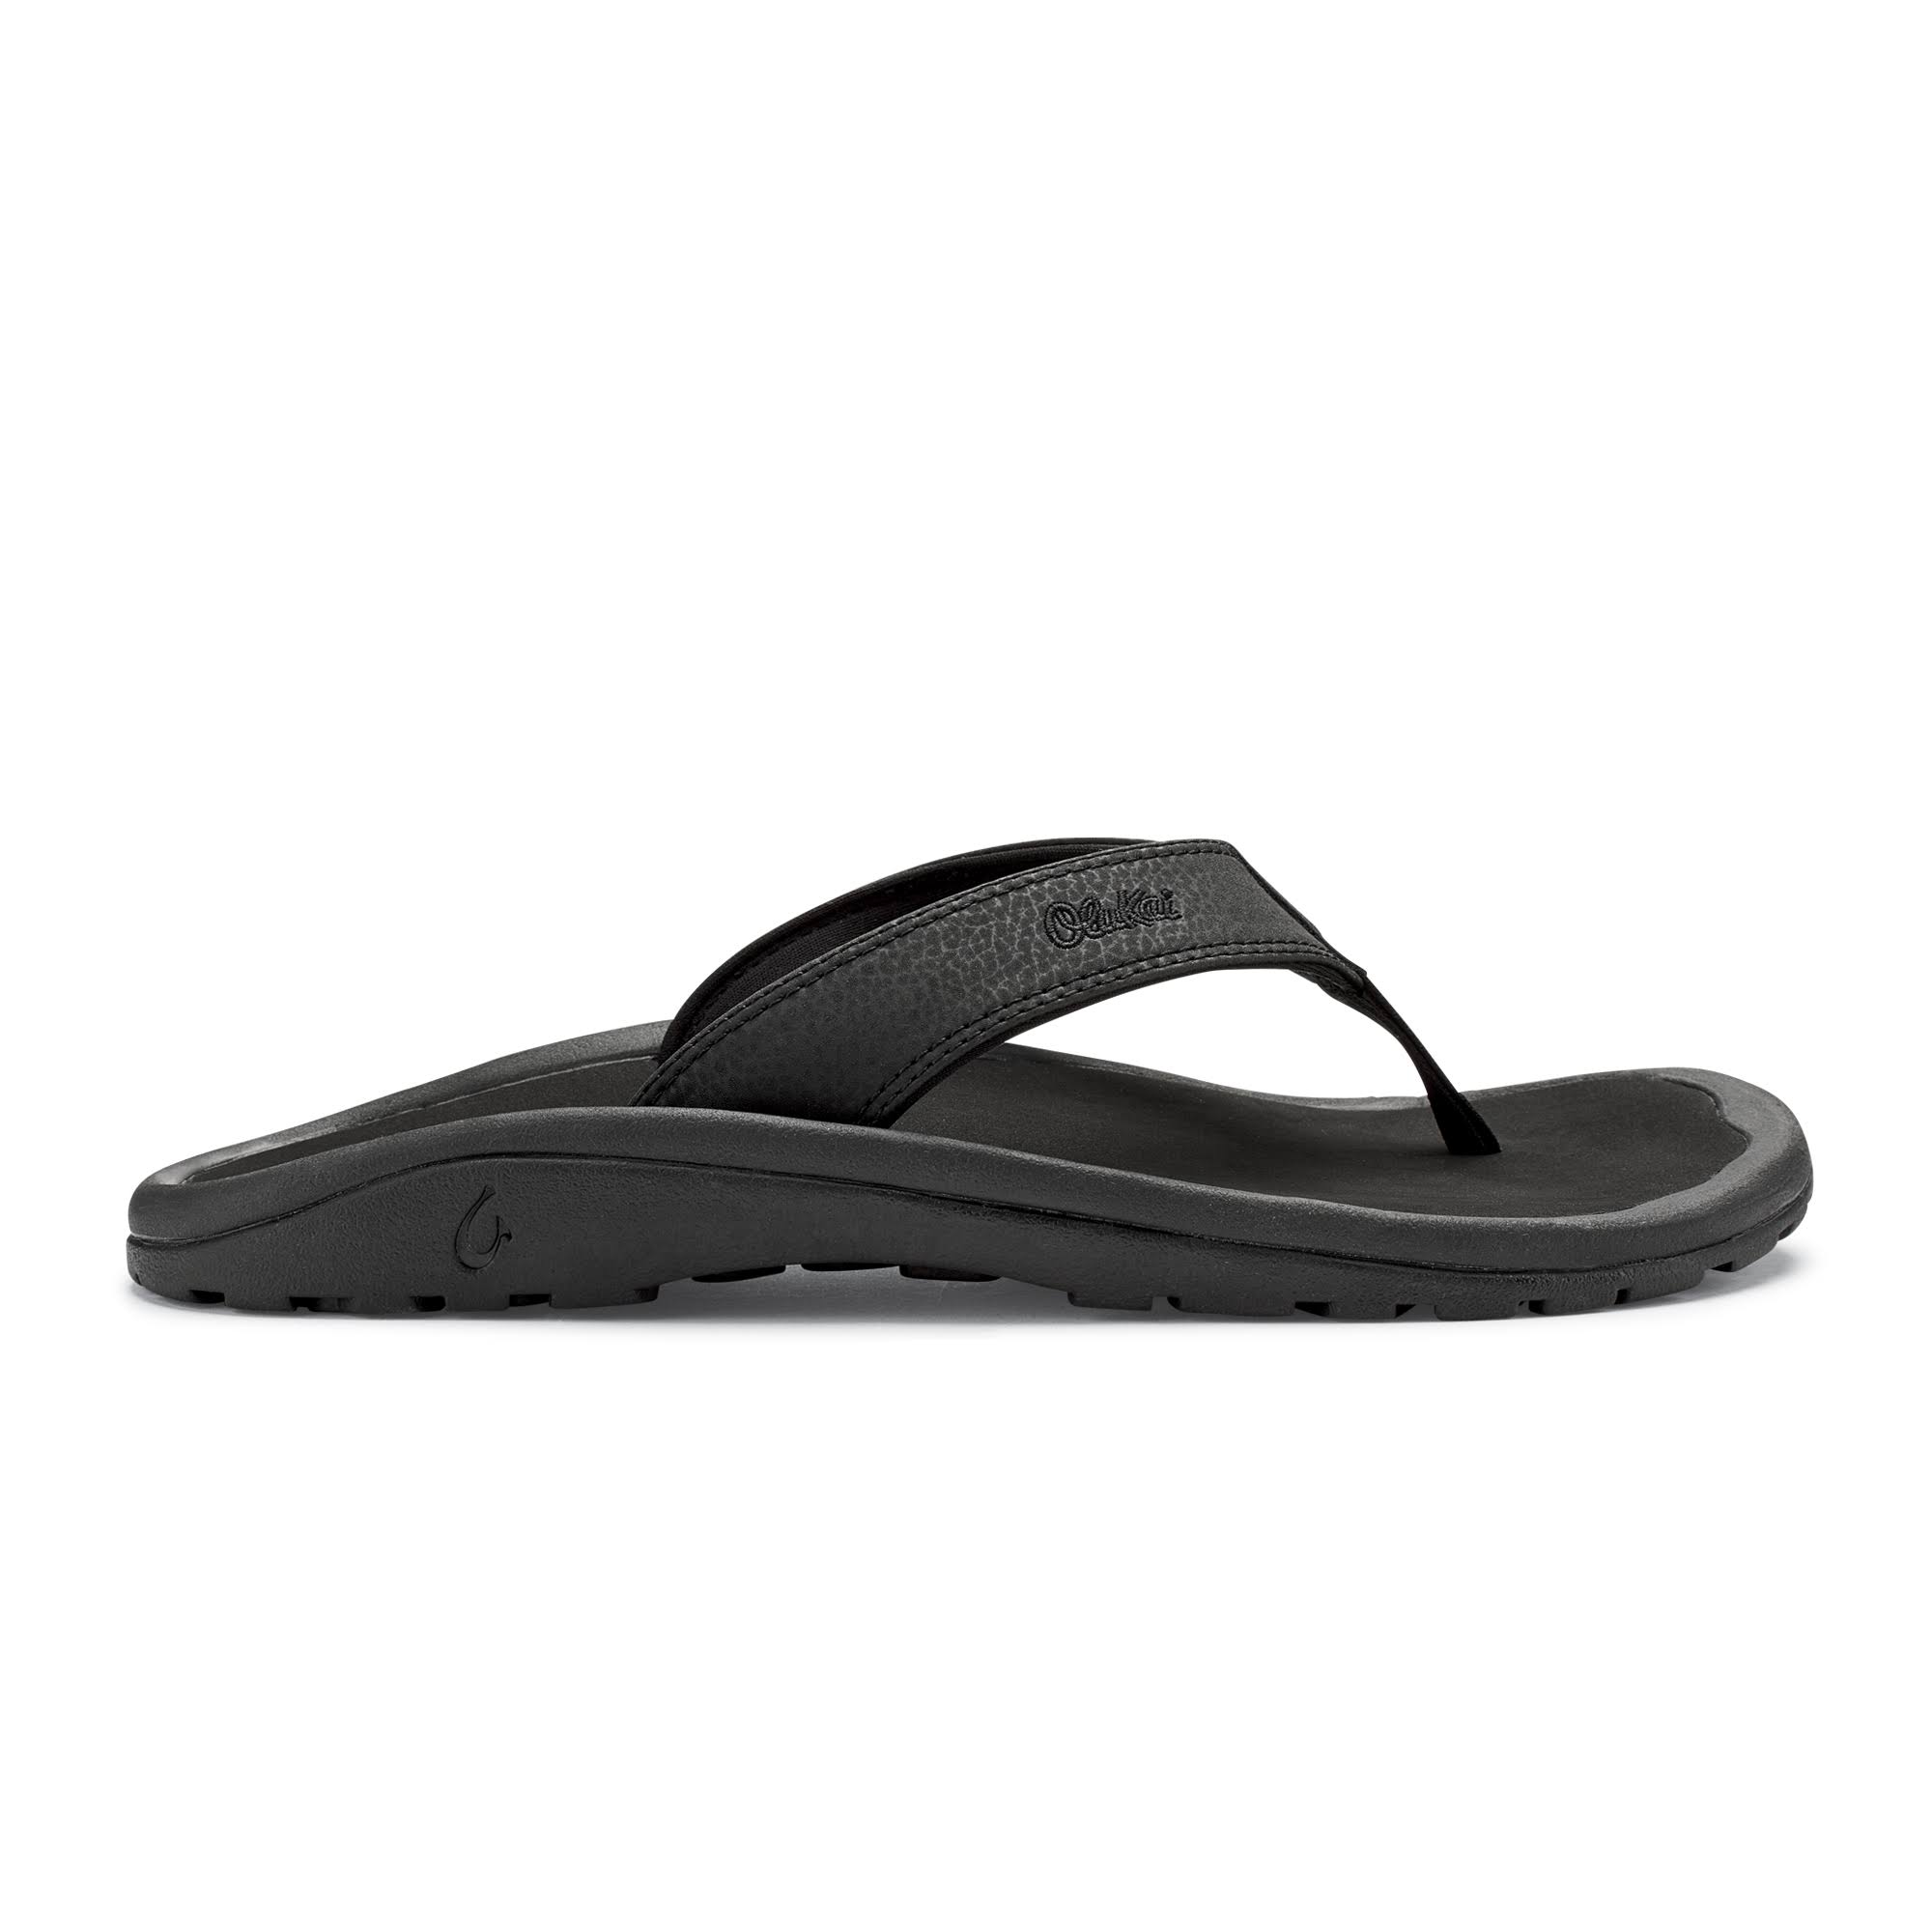 OluKai Ohana Men's Sandals - Black, 13 US